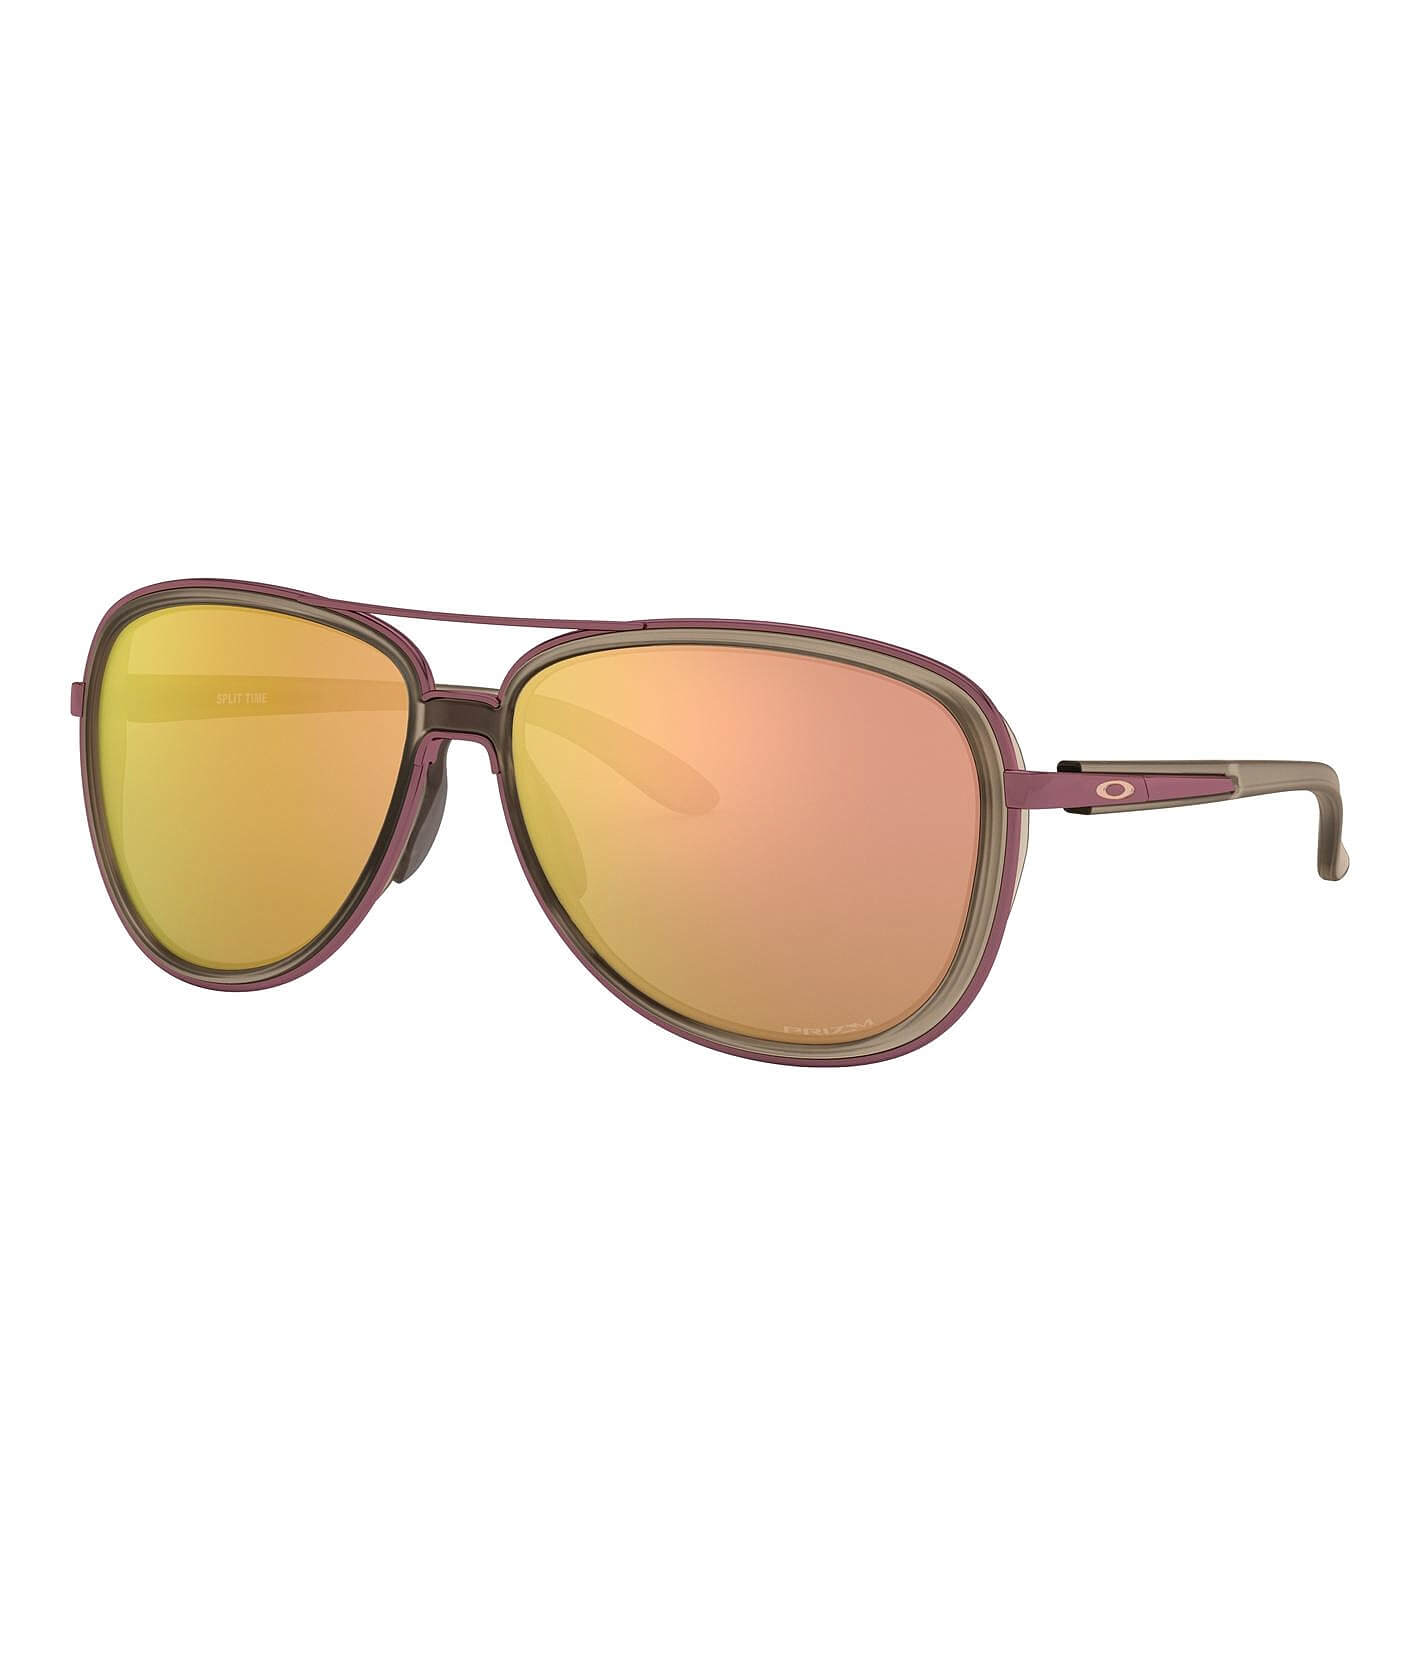 oakley mirrored aviator sunglasses